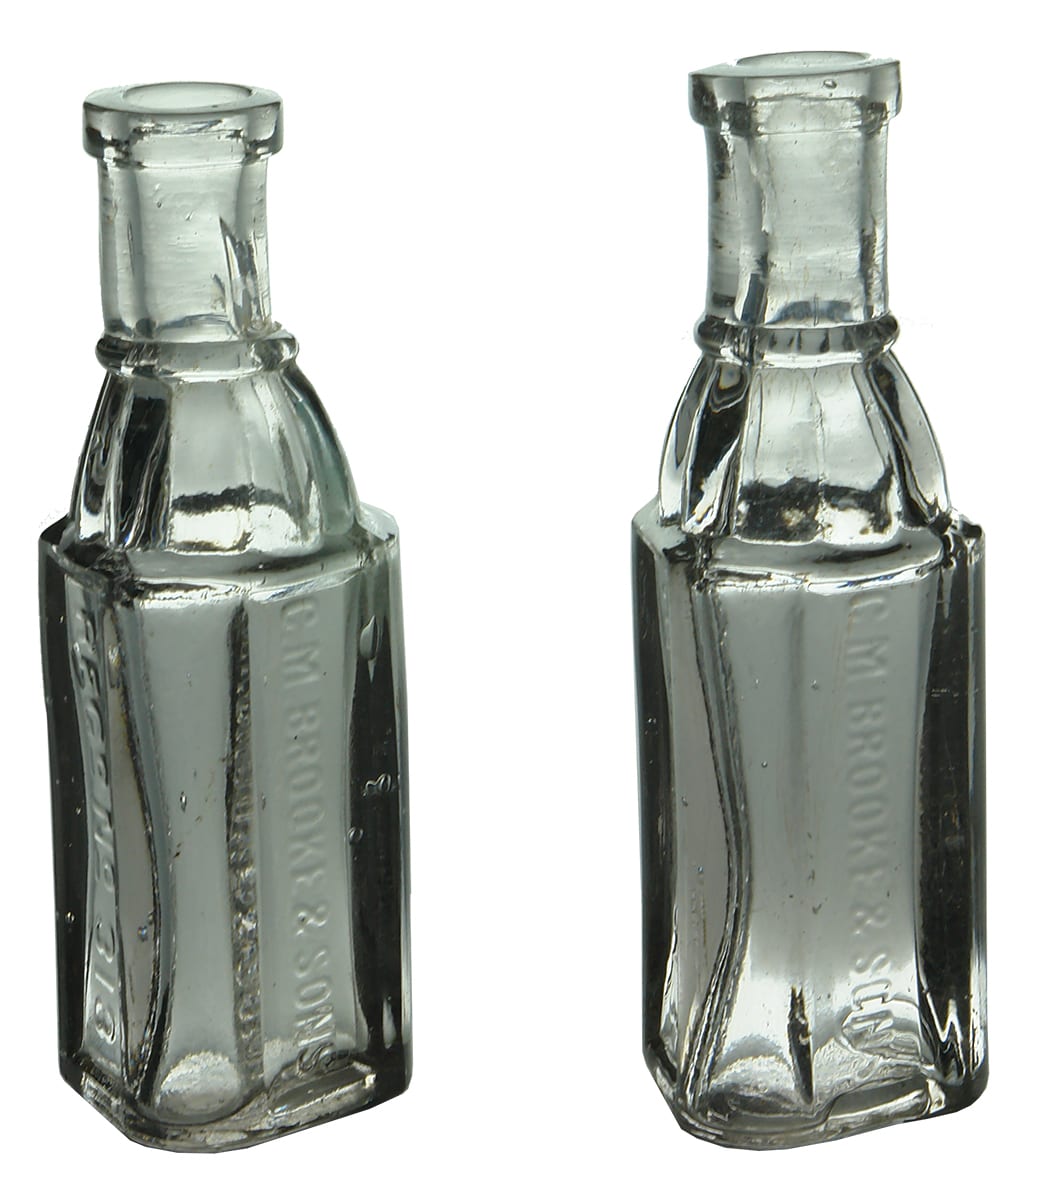 Sample Brookes Cordial Bottles